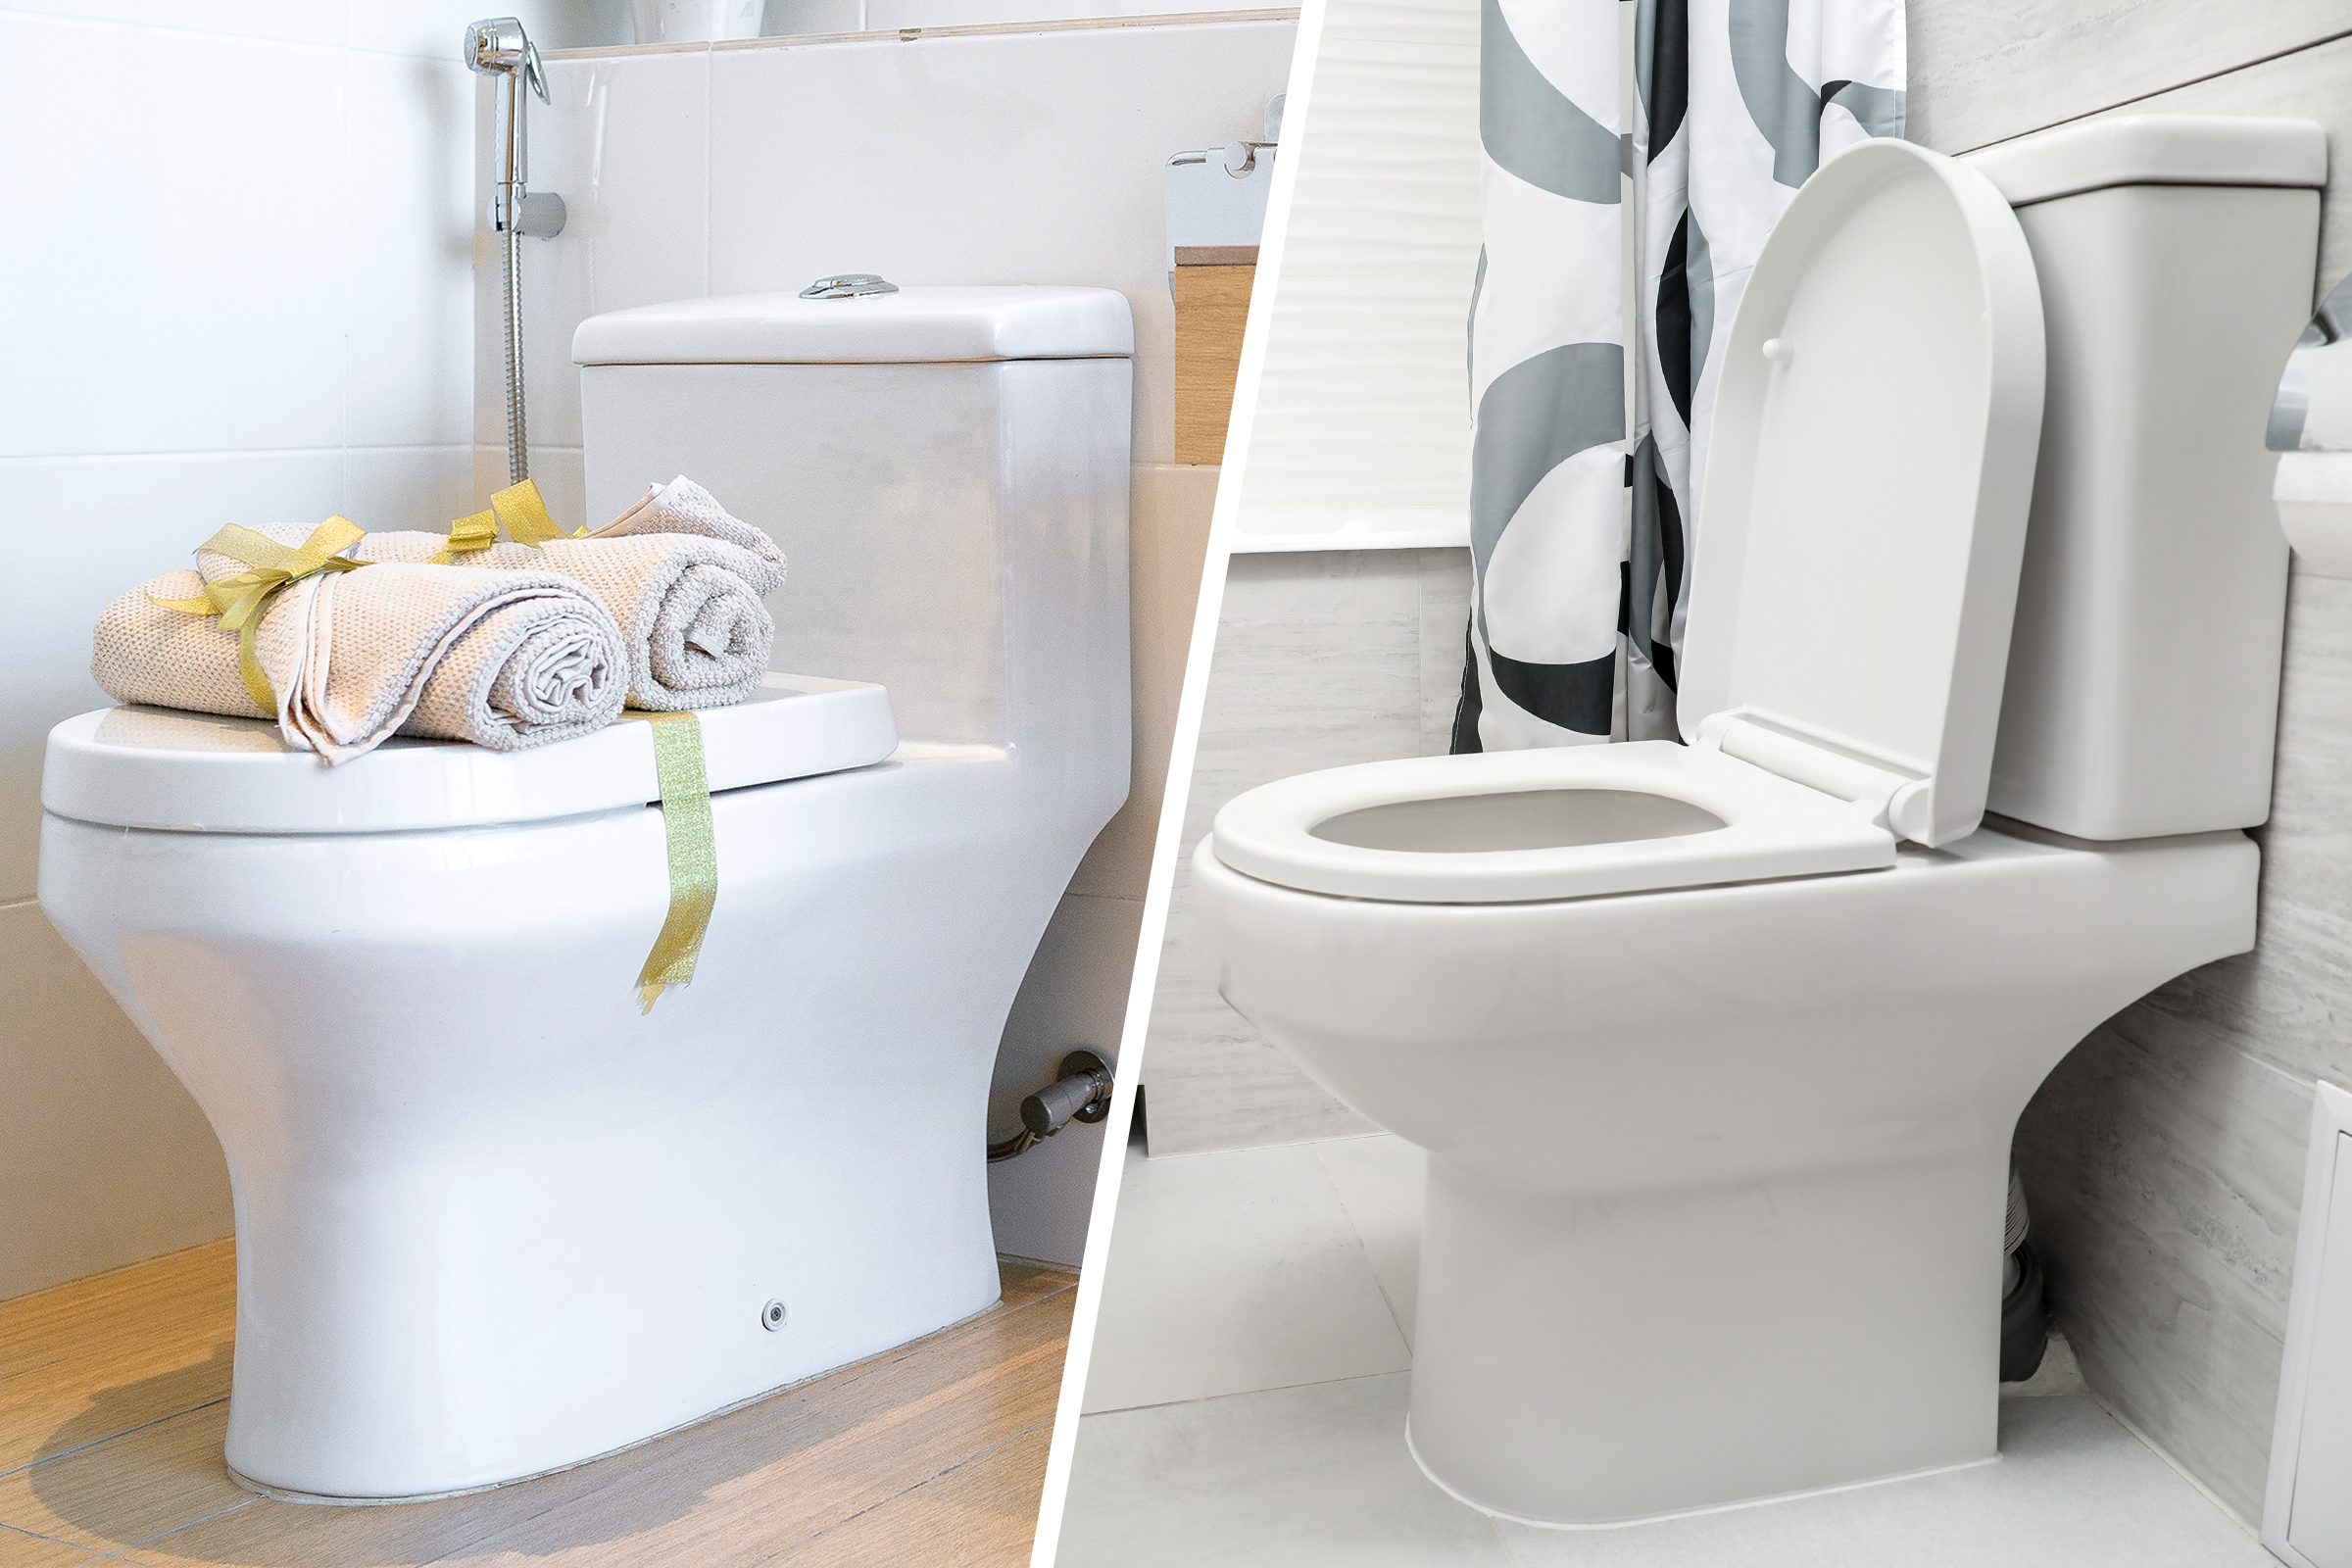 Bathroom - Toilets - Page 1 - Decorative Plumbing Pros